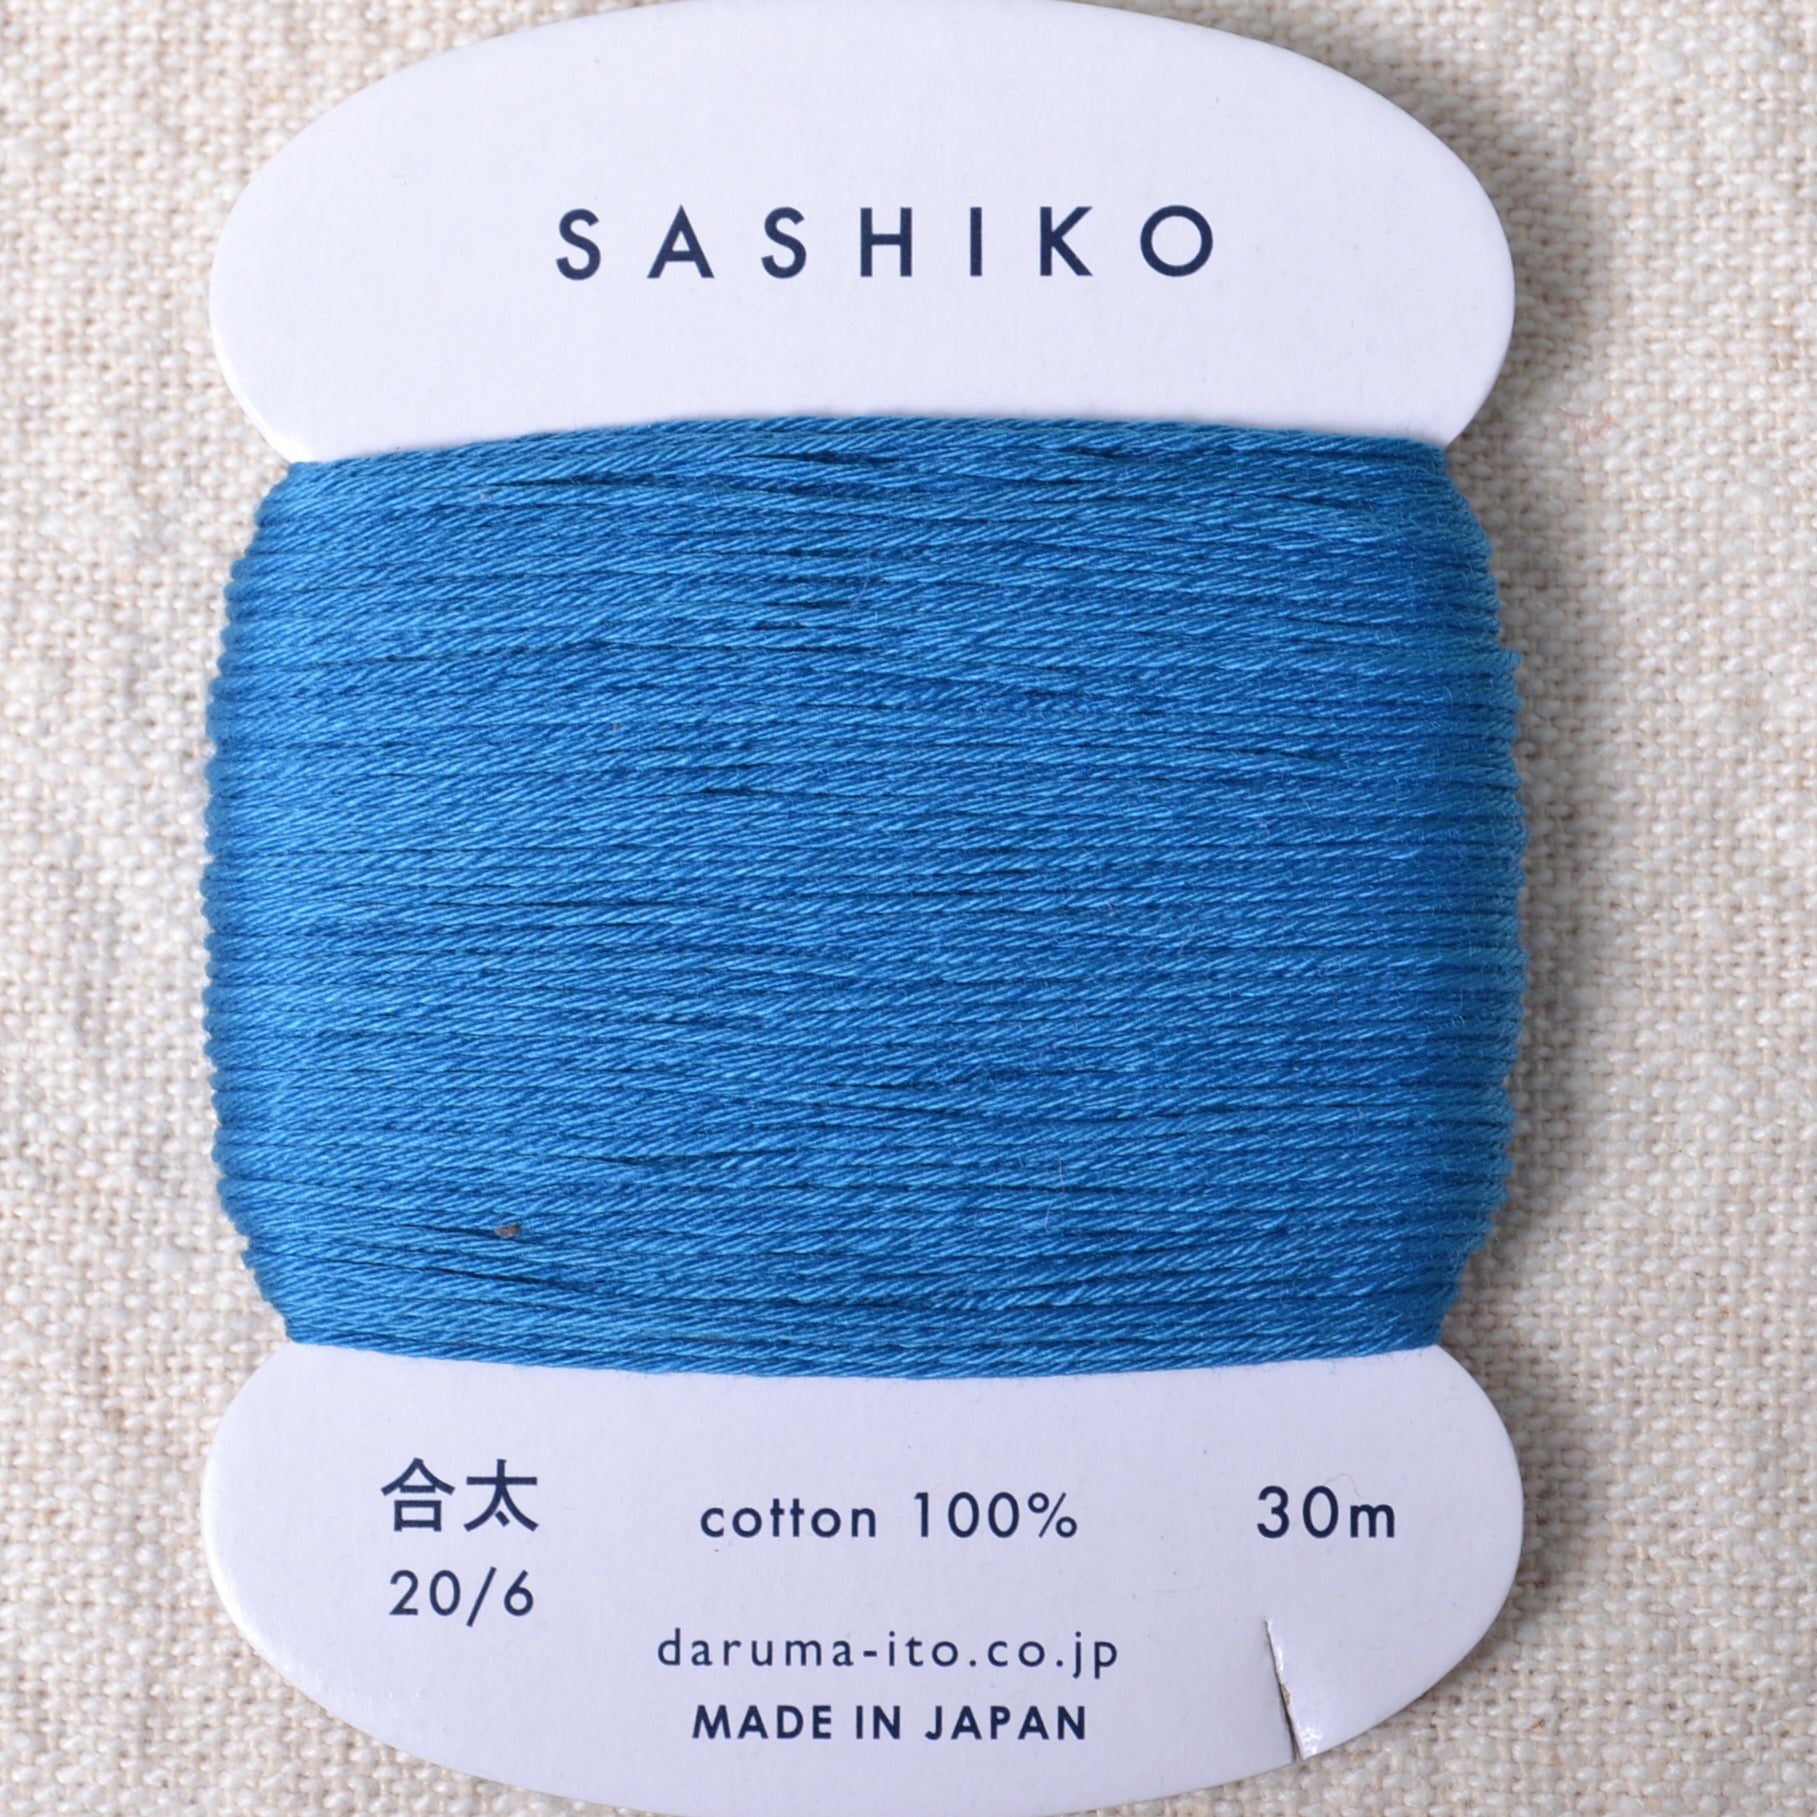 All Sashiko - A Threaded Needle